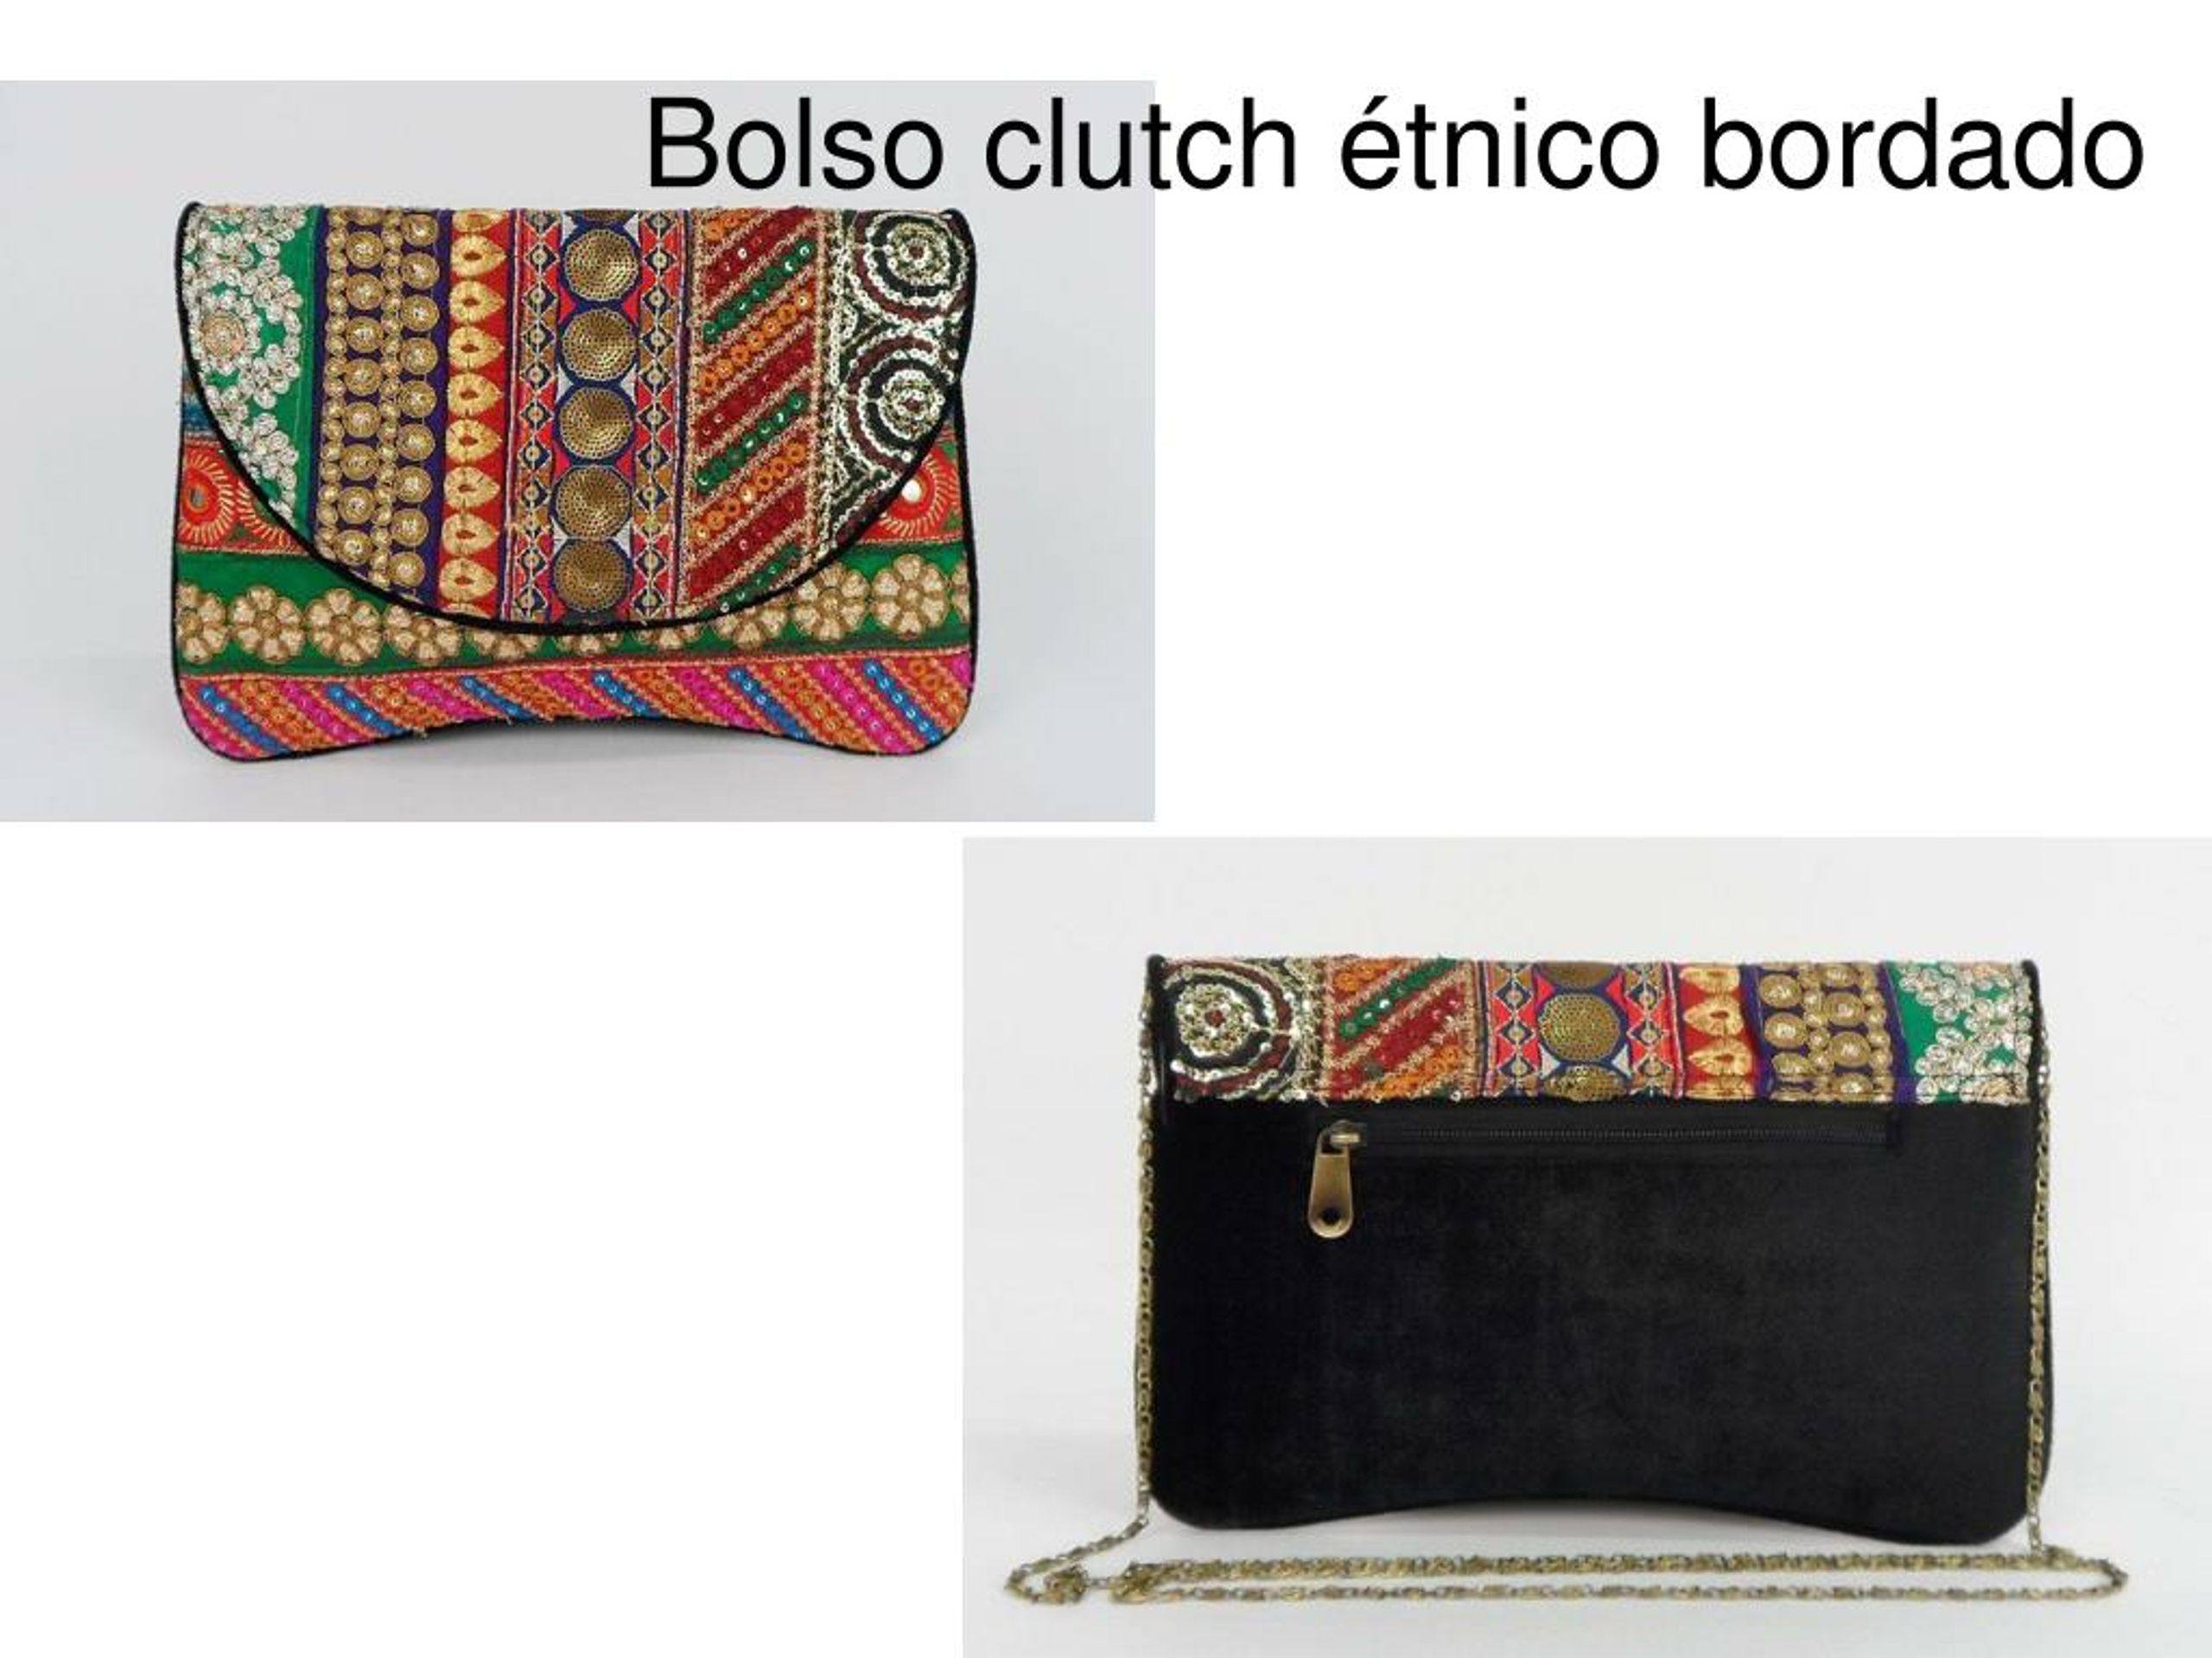 Ppt Bolsos Textiles Y Etnicos Powerpoint Presentation Free Download Id